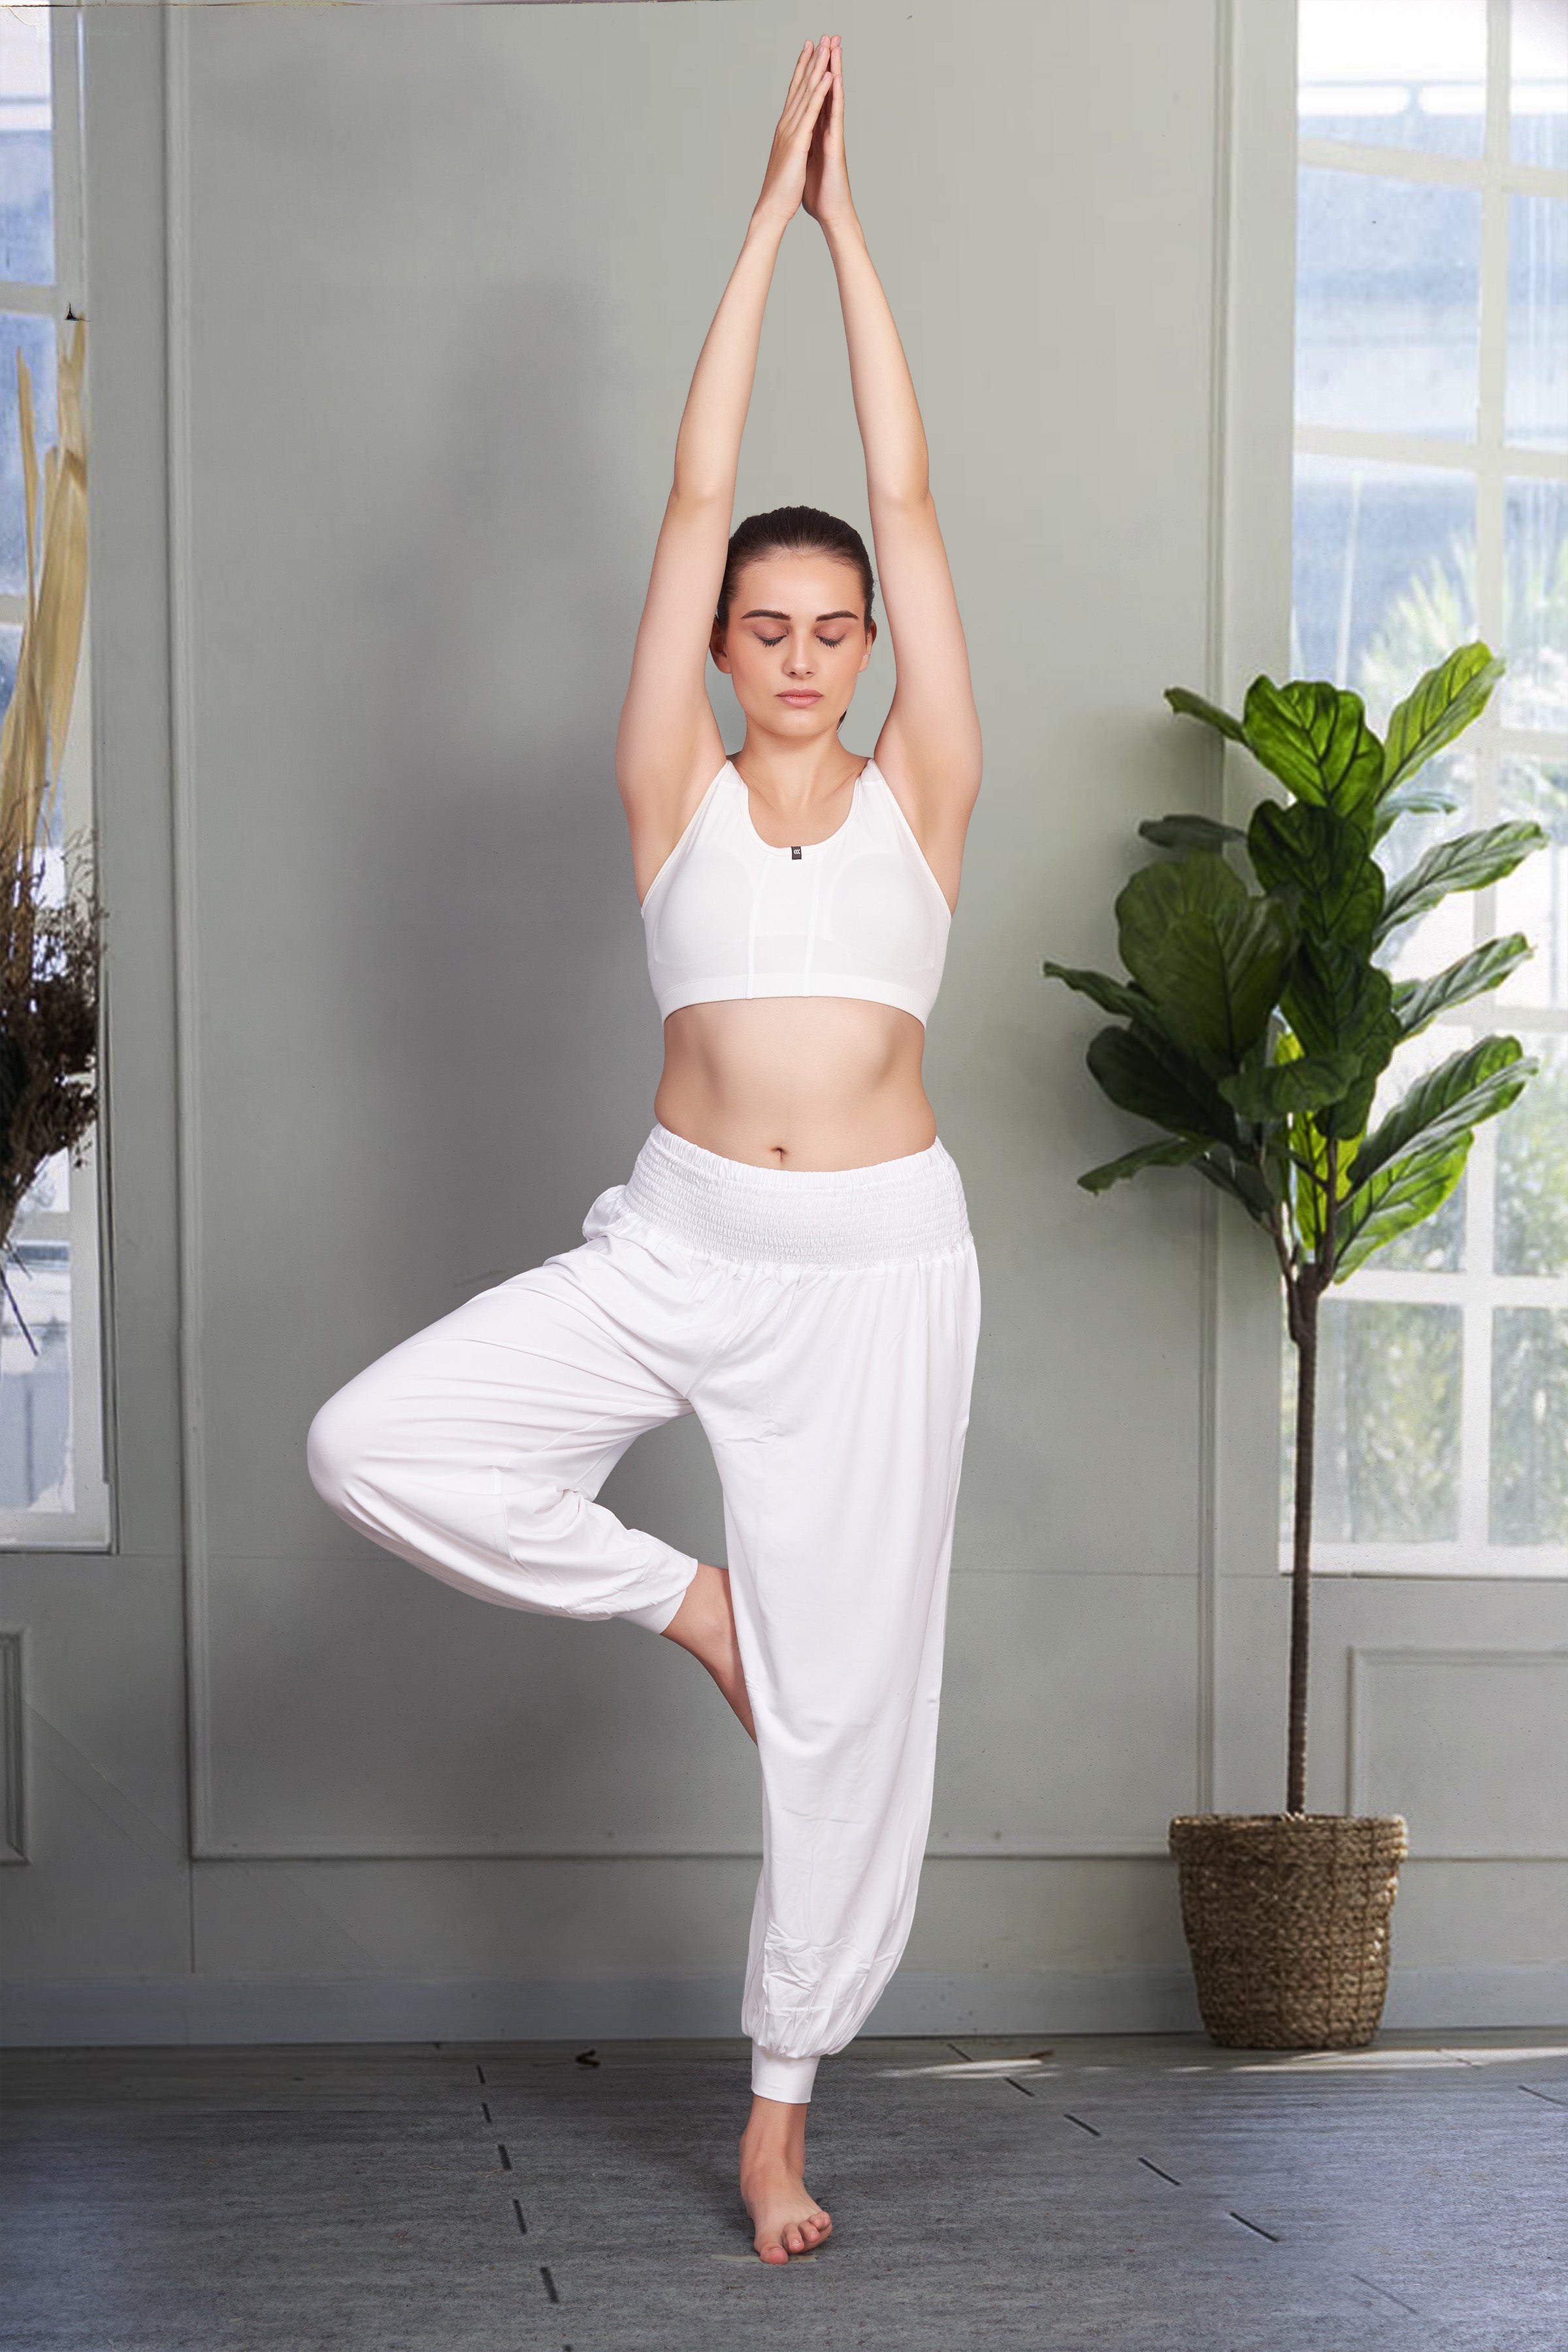 TESNN Women's Boho Pants Comfy Harem Smocked Waist Yoga Pants with Pockets  Lounge Jogger Pants 